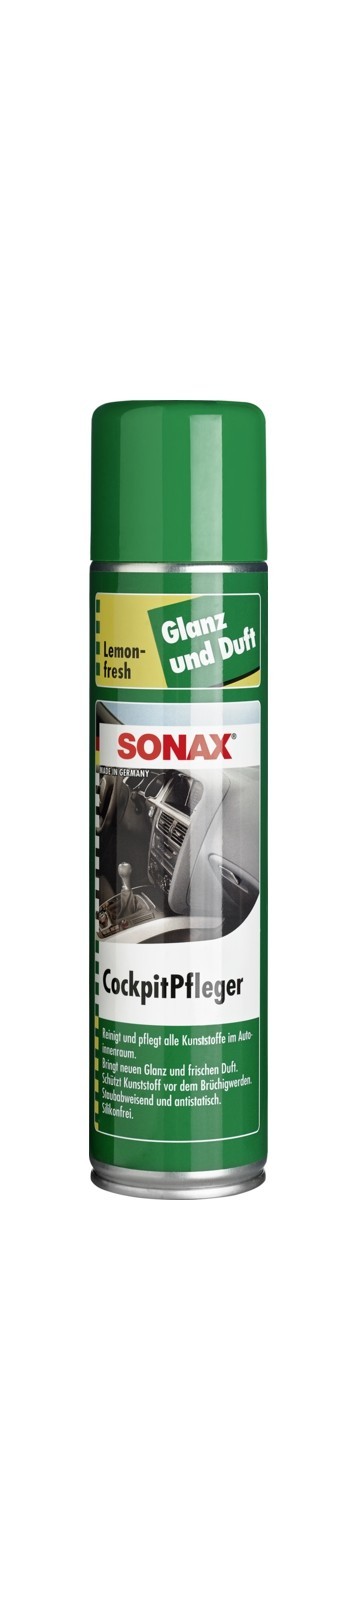 SONAX Cockpit-Pfleger Lemon-fresh (400 ml), Art.-Nr. 03433000